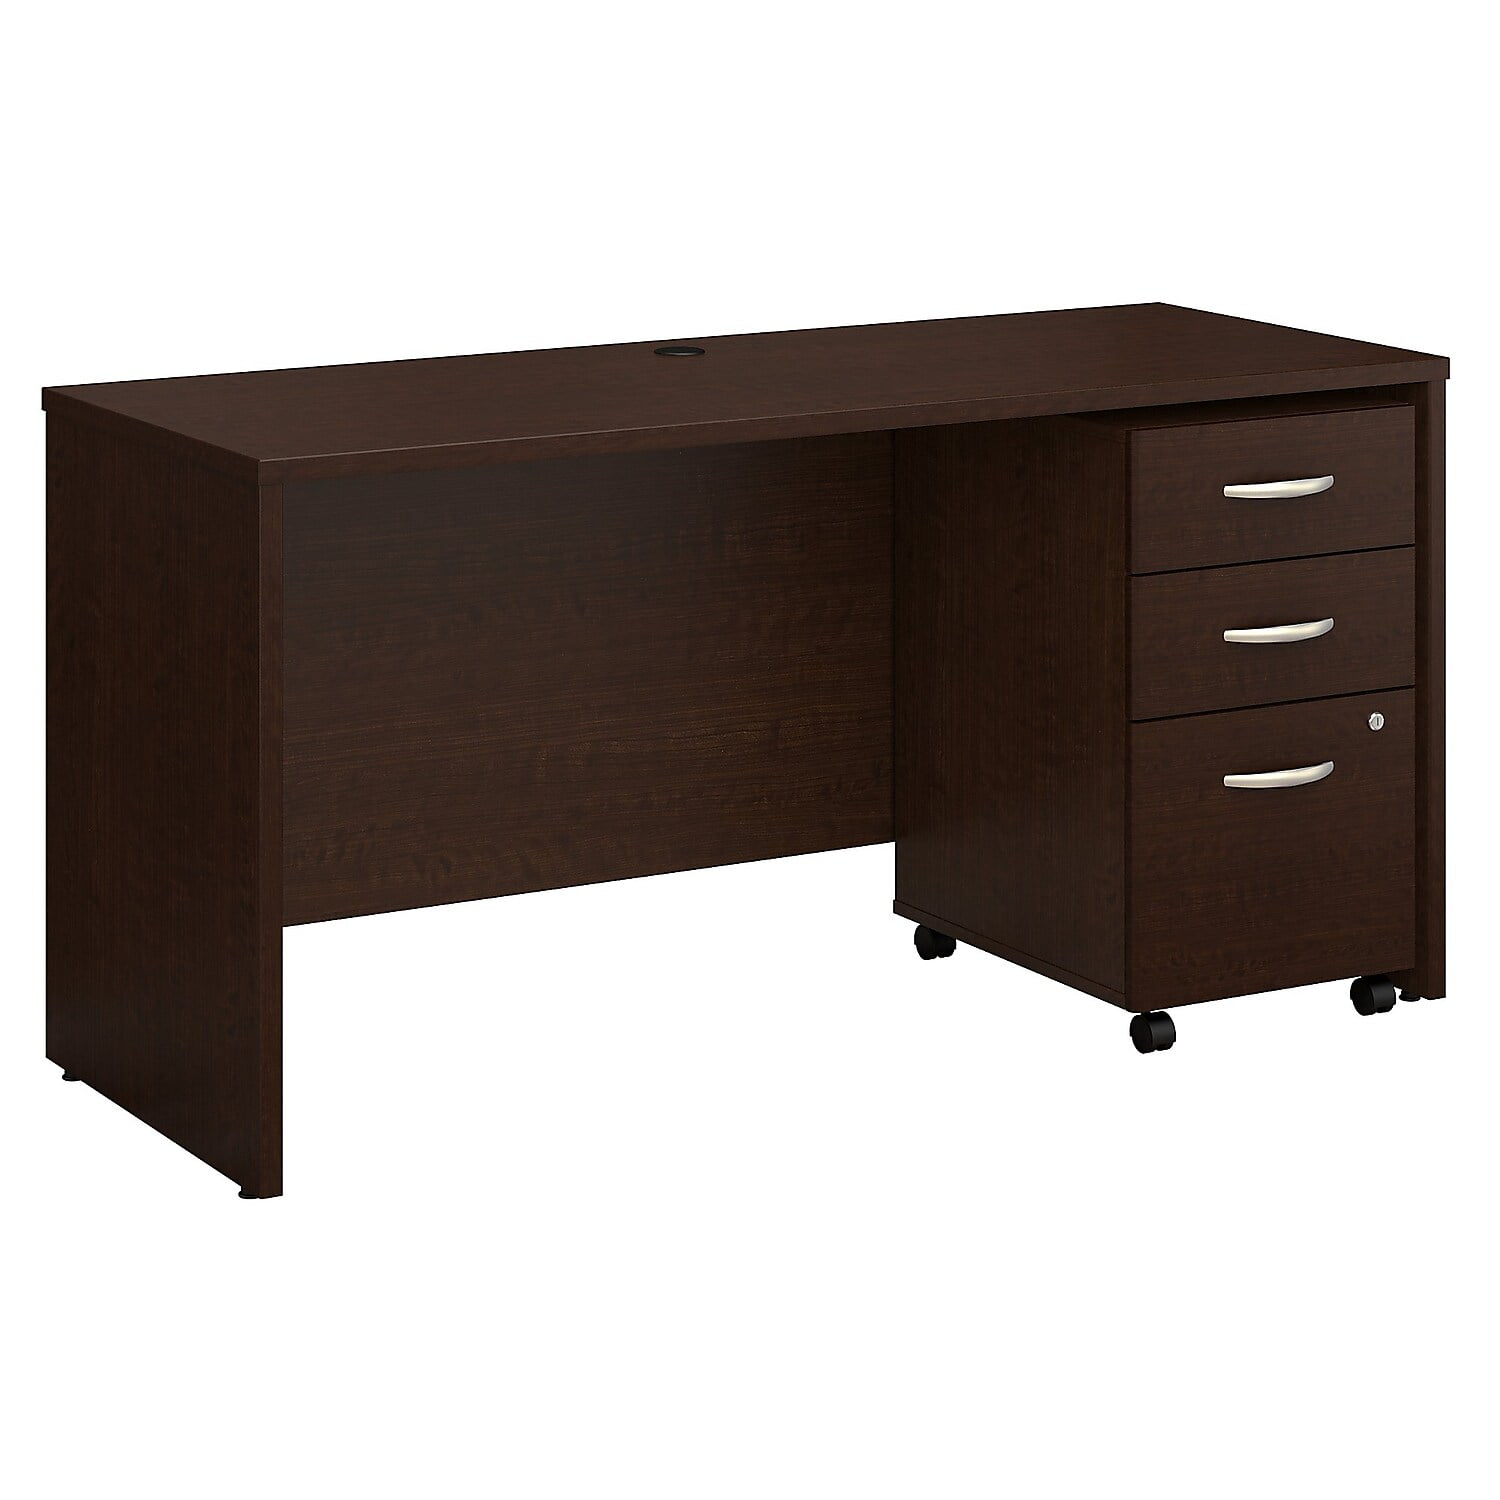 Picture of Bush Business Furniture SRC025MRSU 60 x 24 in. Series C Office Desk with Mobile File Cabinet - Mocha Cherry